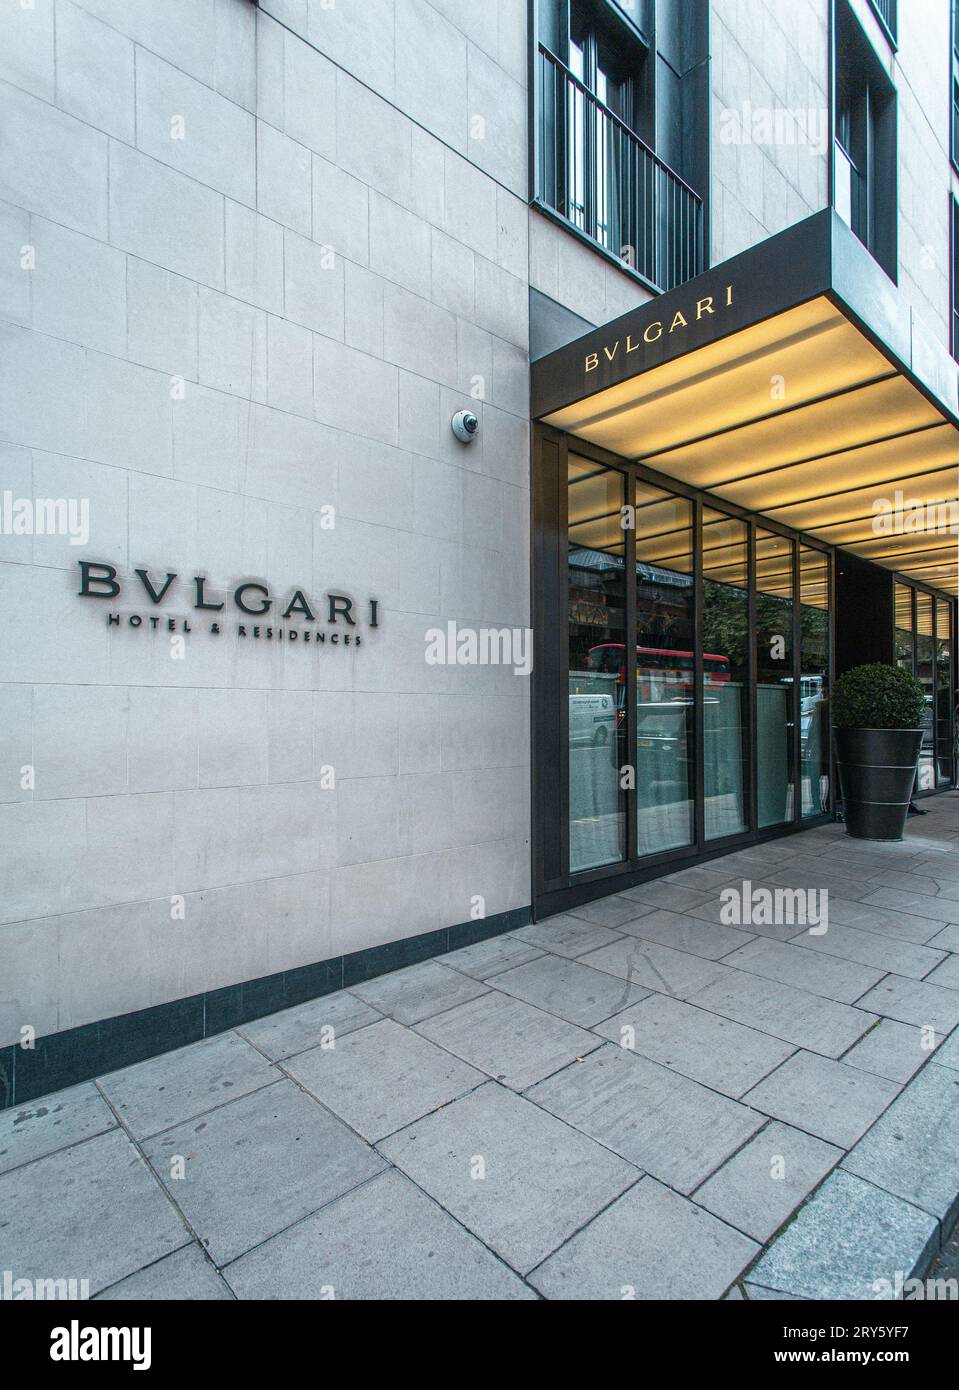 L'Hôtel Bulgari, Knightsbridge, London, UK Banque D'Images